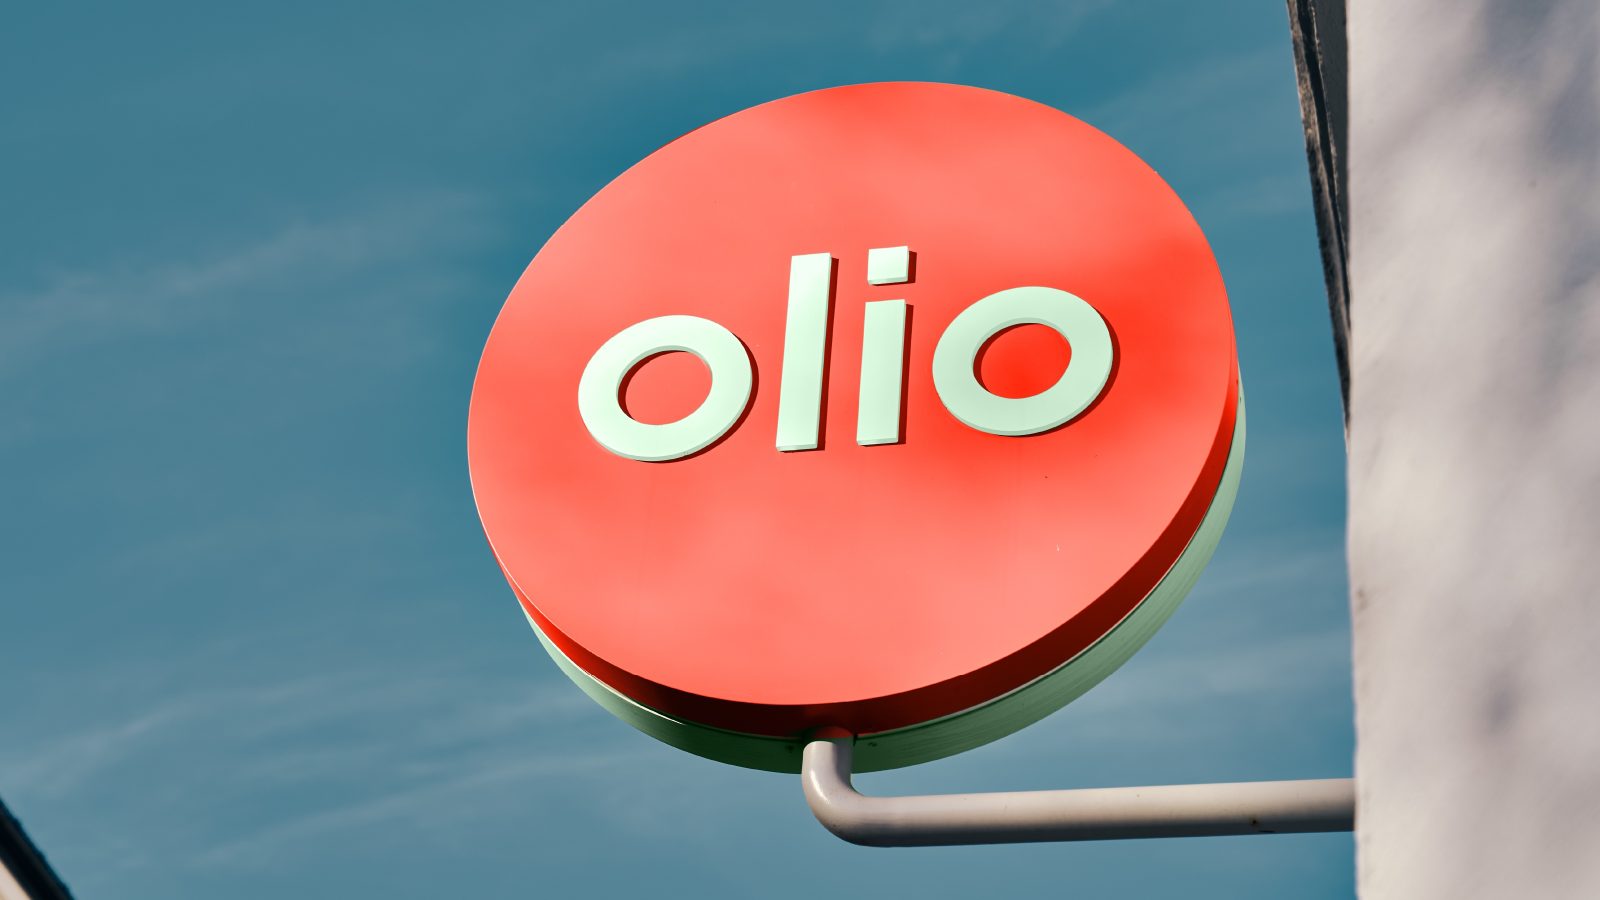 Olio Writing and Brand Identity